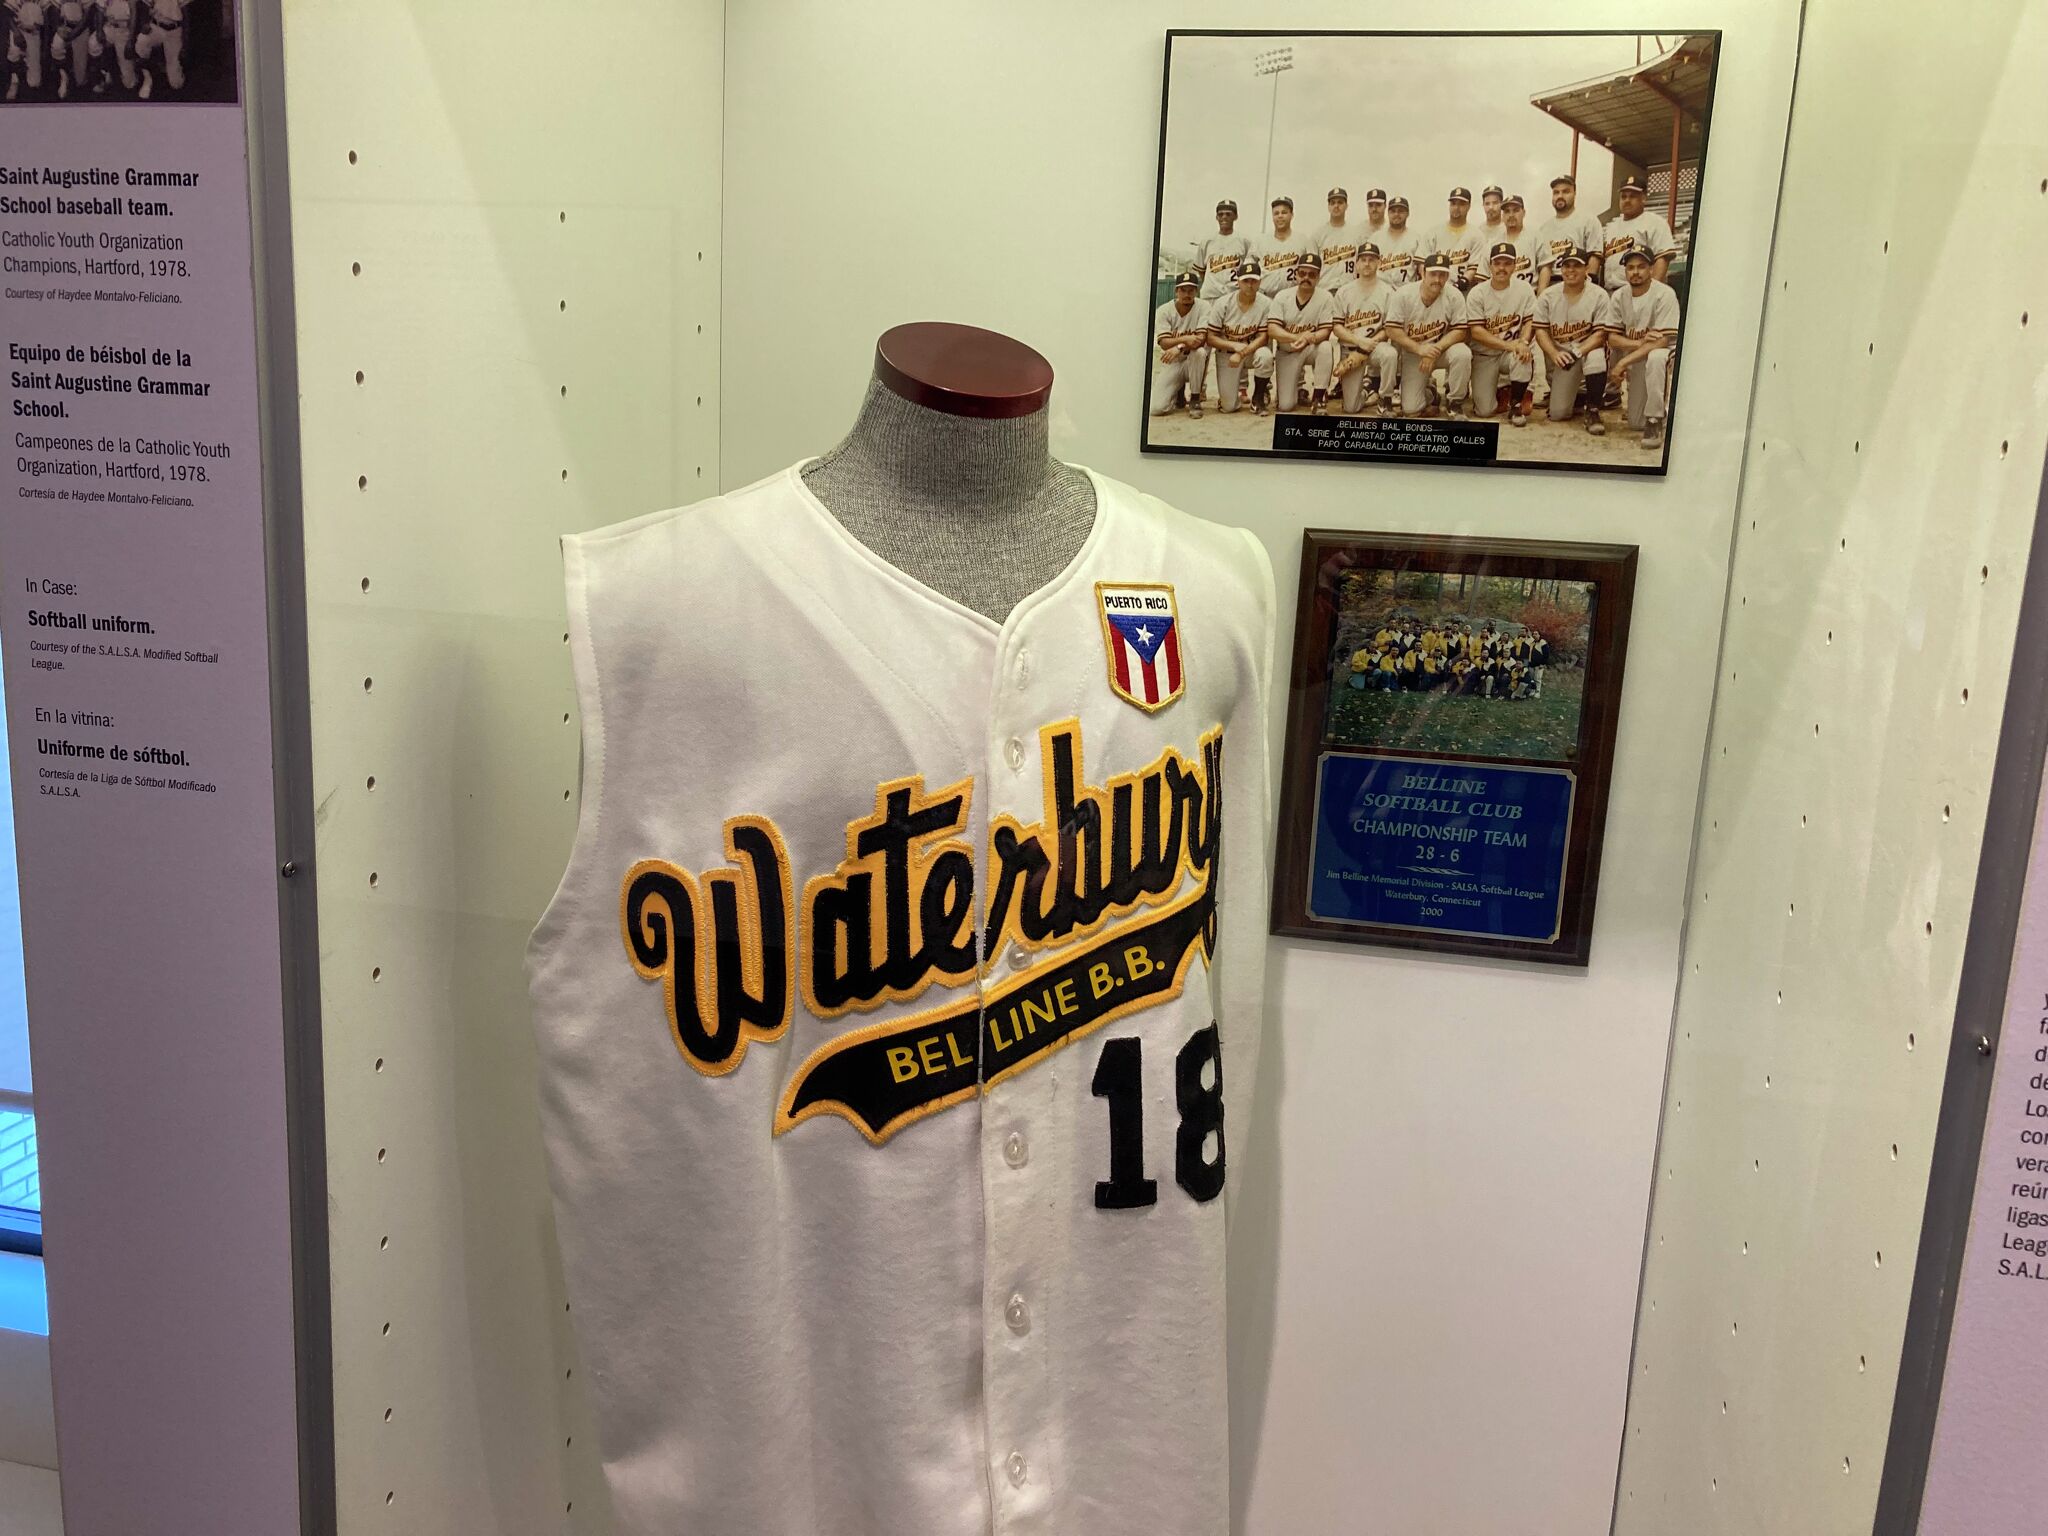 Robinson's baseball jersey on display at Smithsonian museum